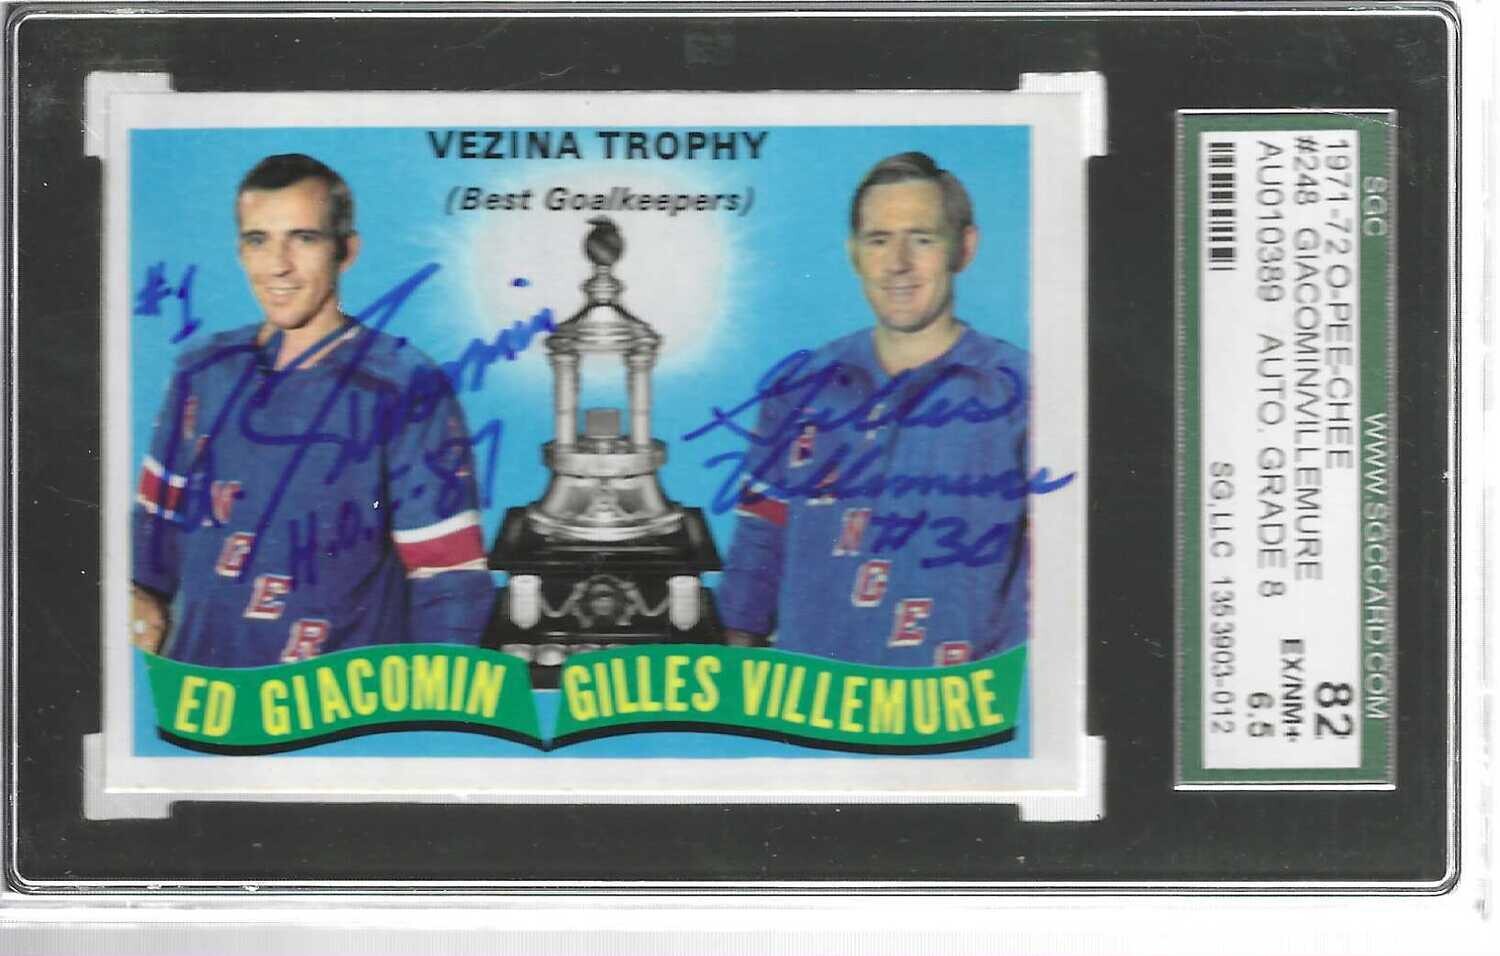 1971/72 Opeechee #248 Ed Giacomin/Gilles Villemure Vezina  Trophy Autographed card SGC 6.5